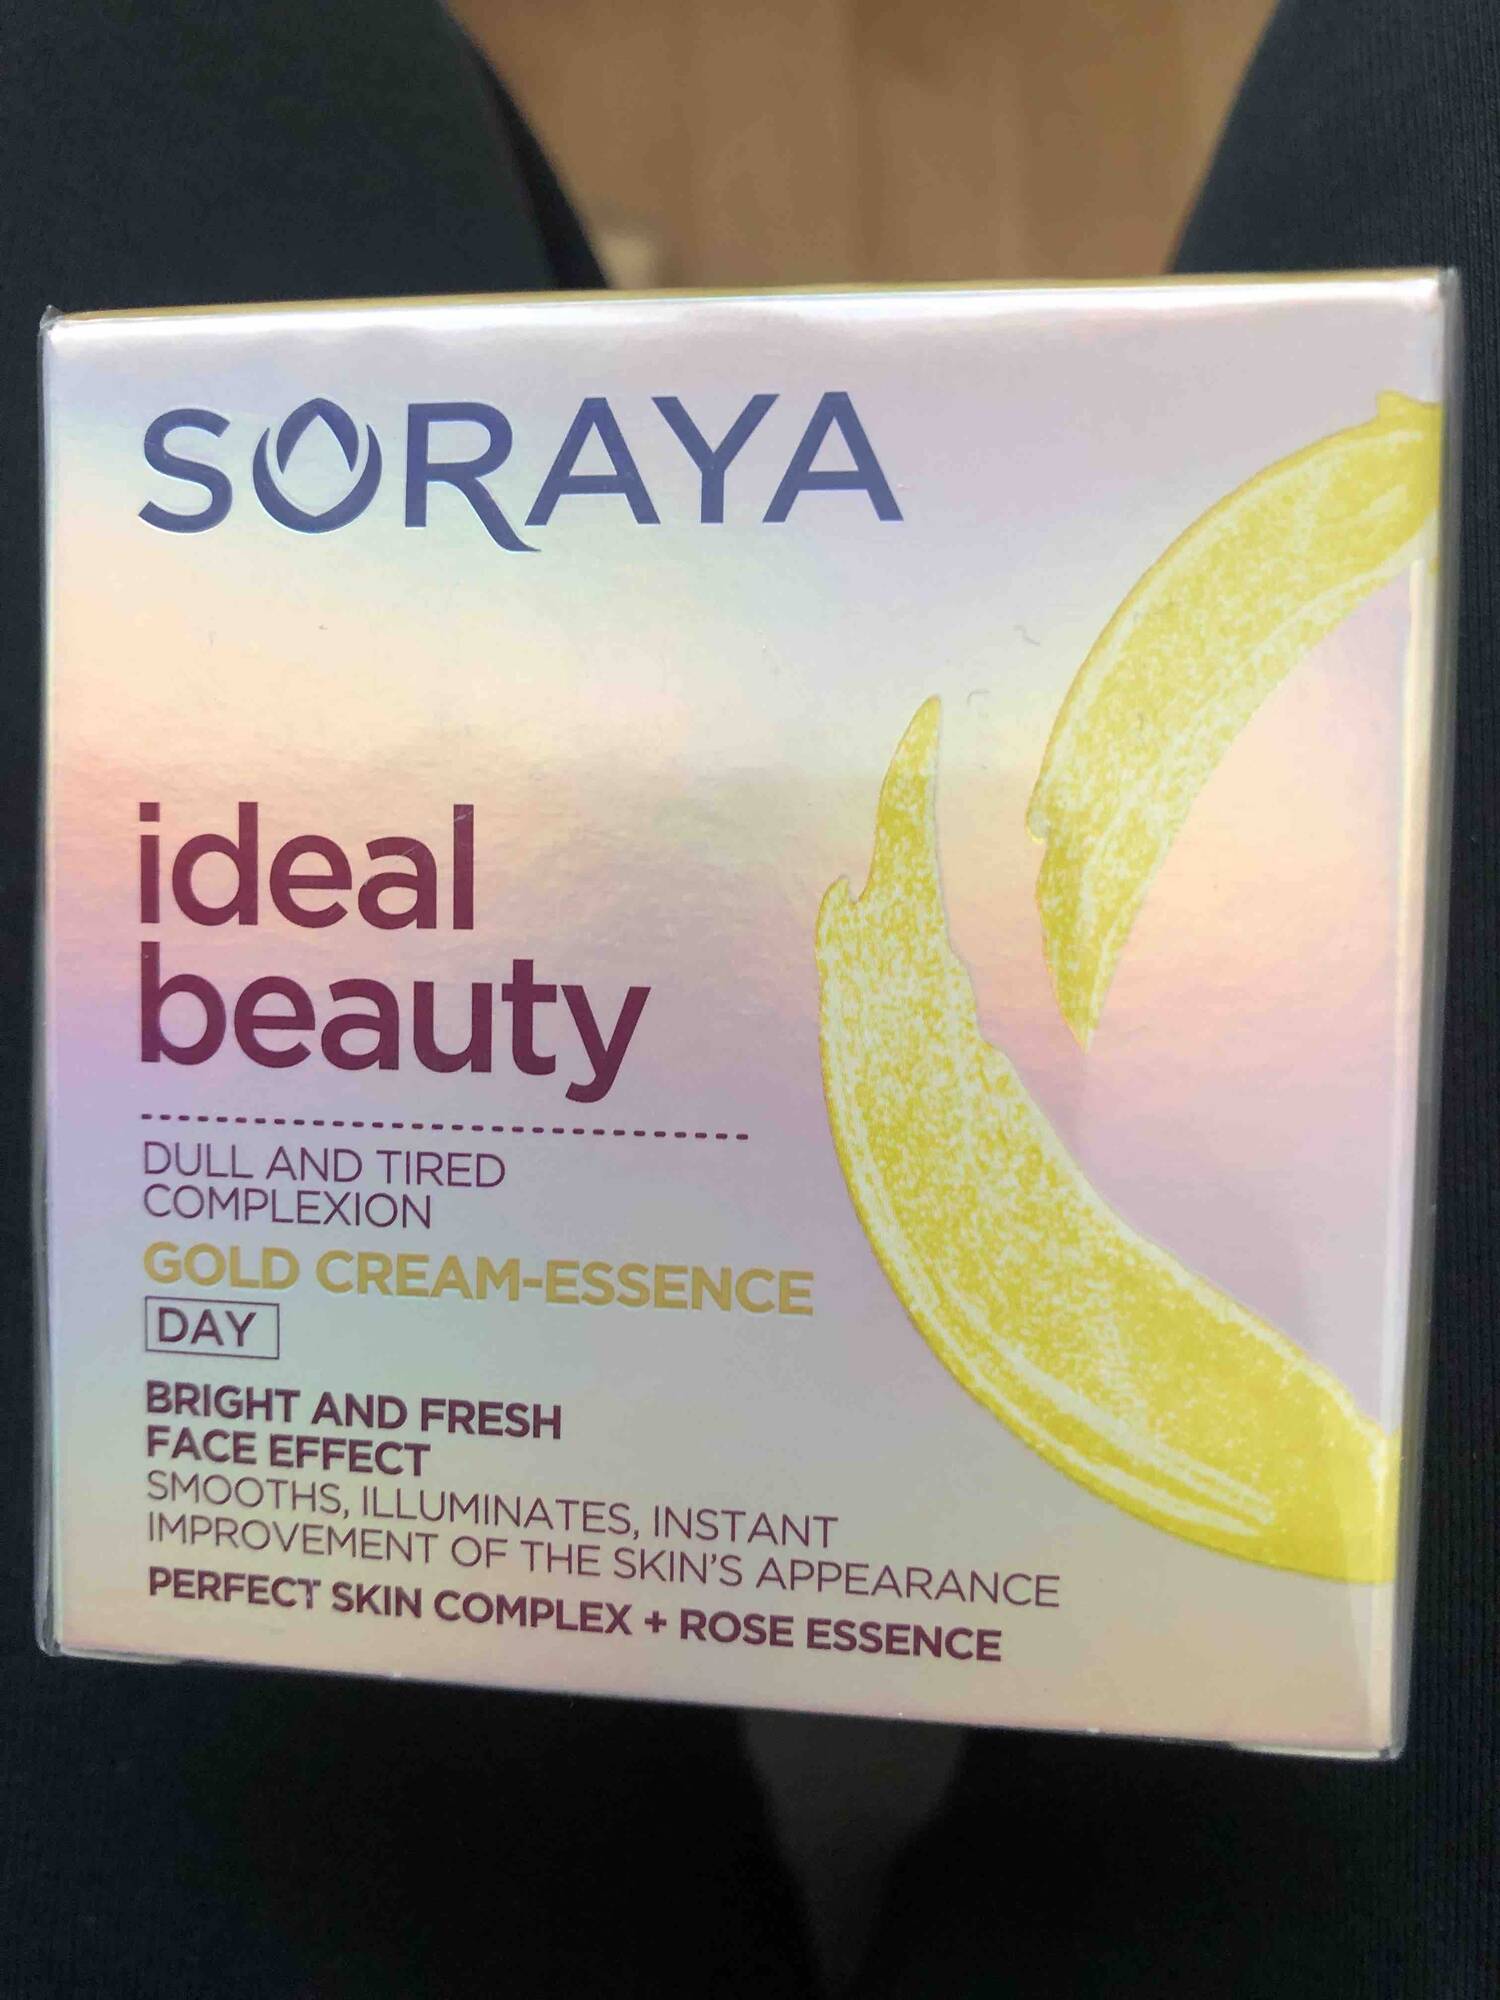 SORAYA - Ideal beauty - Gold cream-essence day